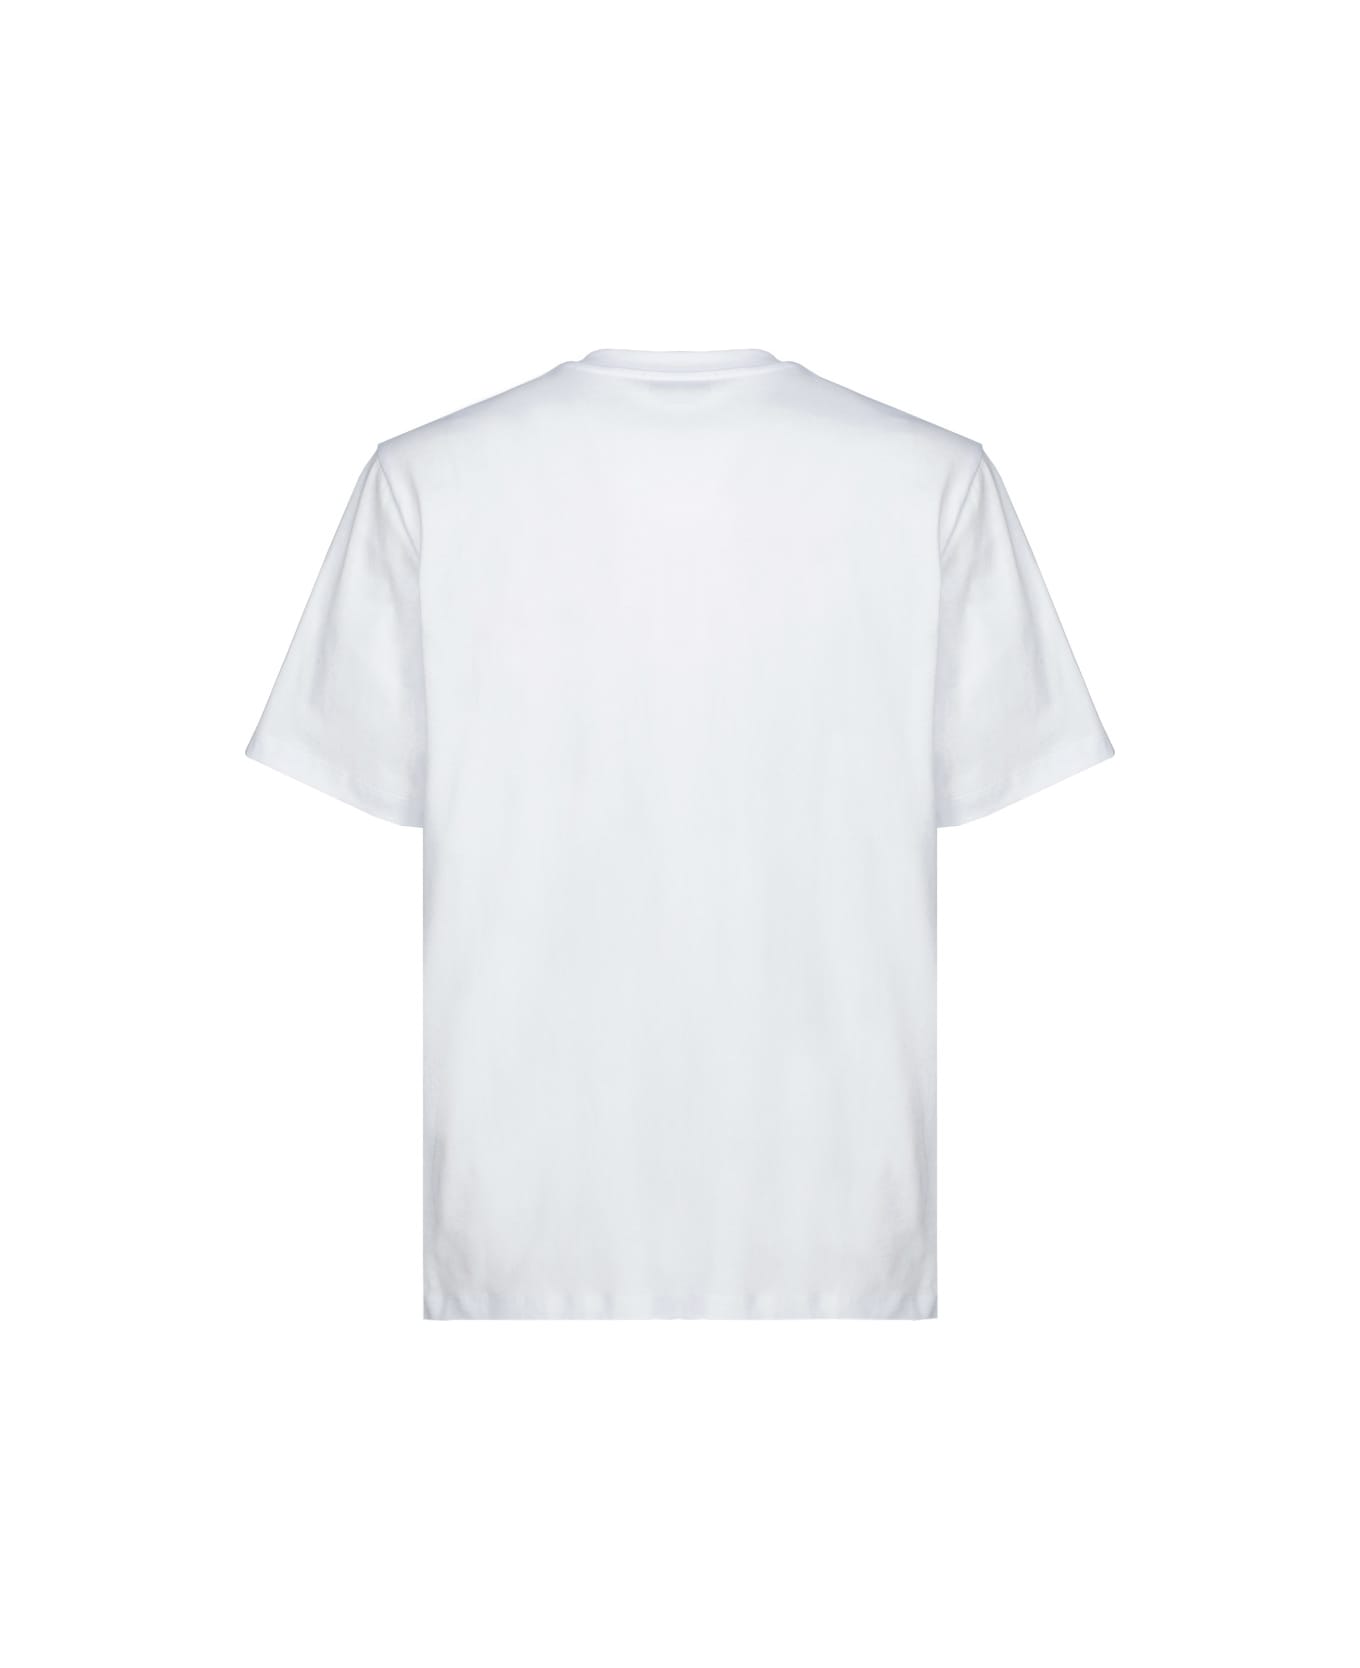 MSGM T-shirt - Bianco